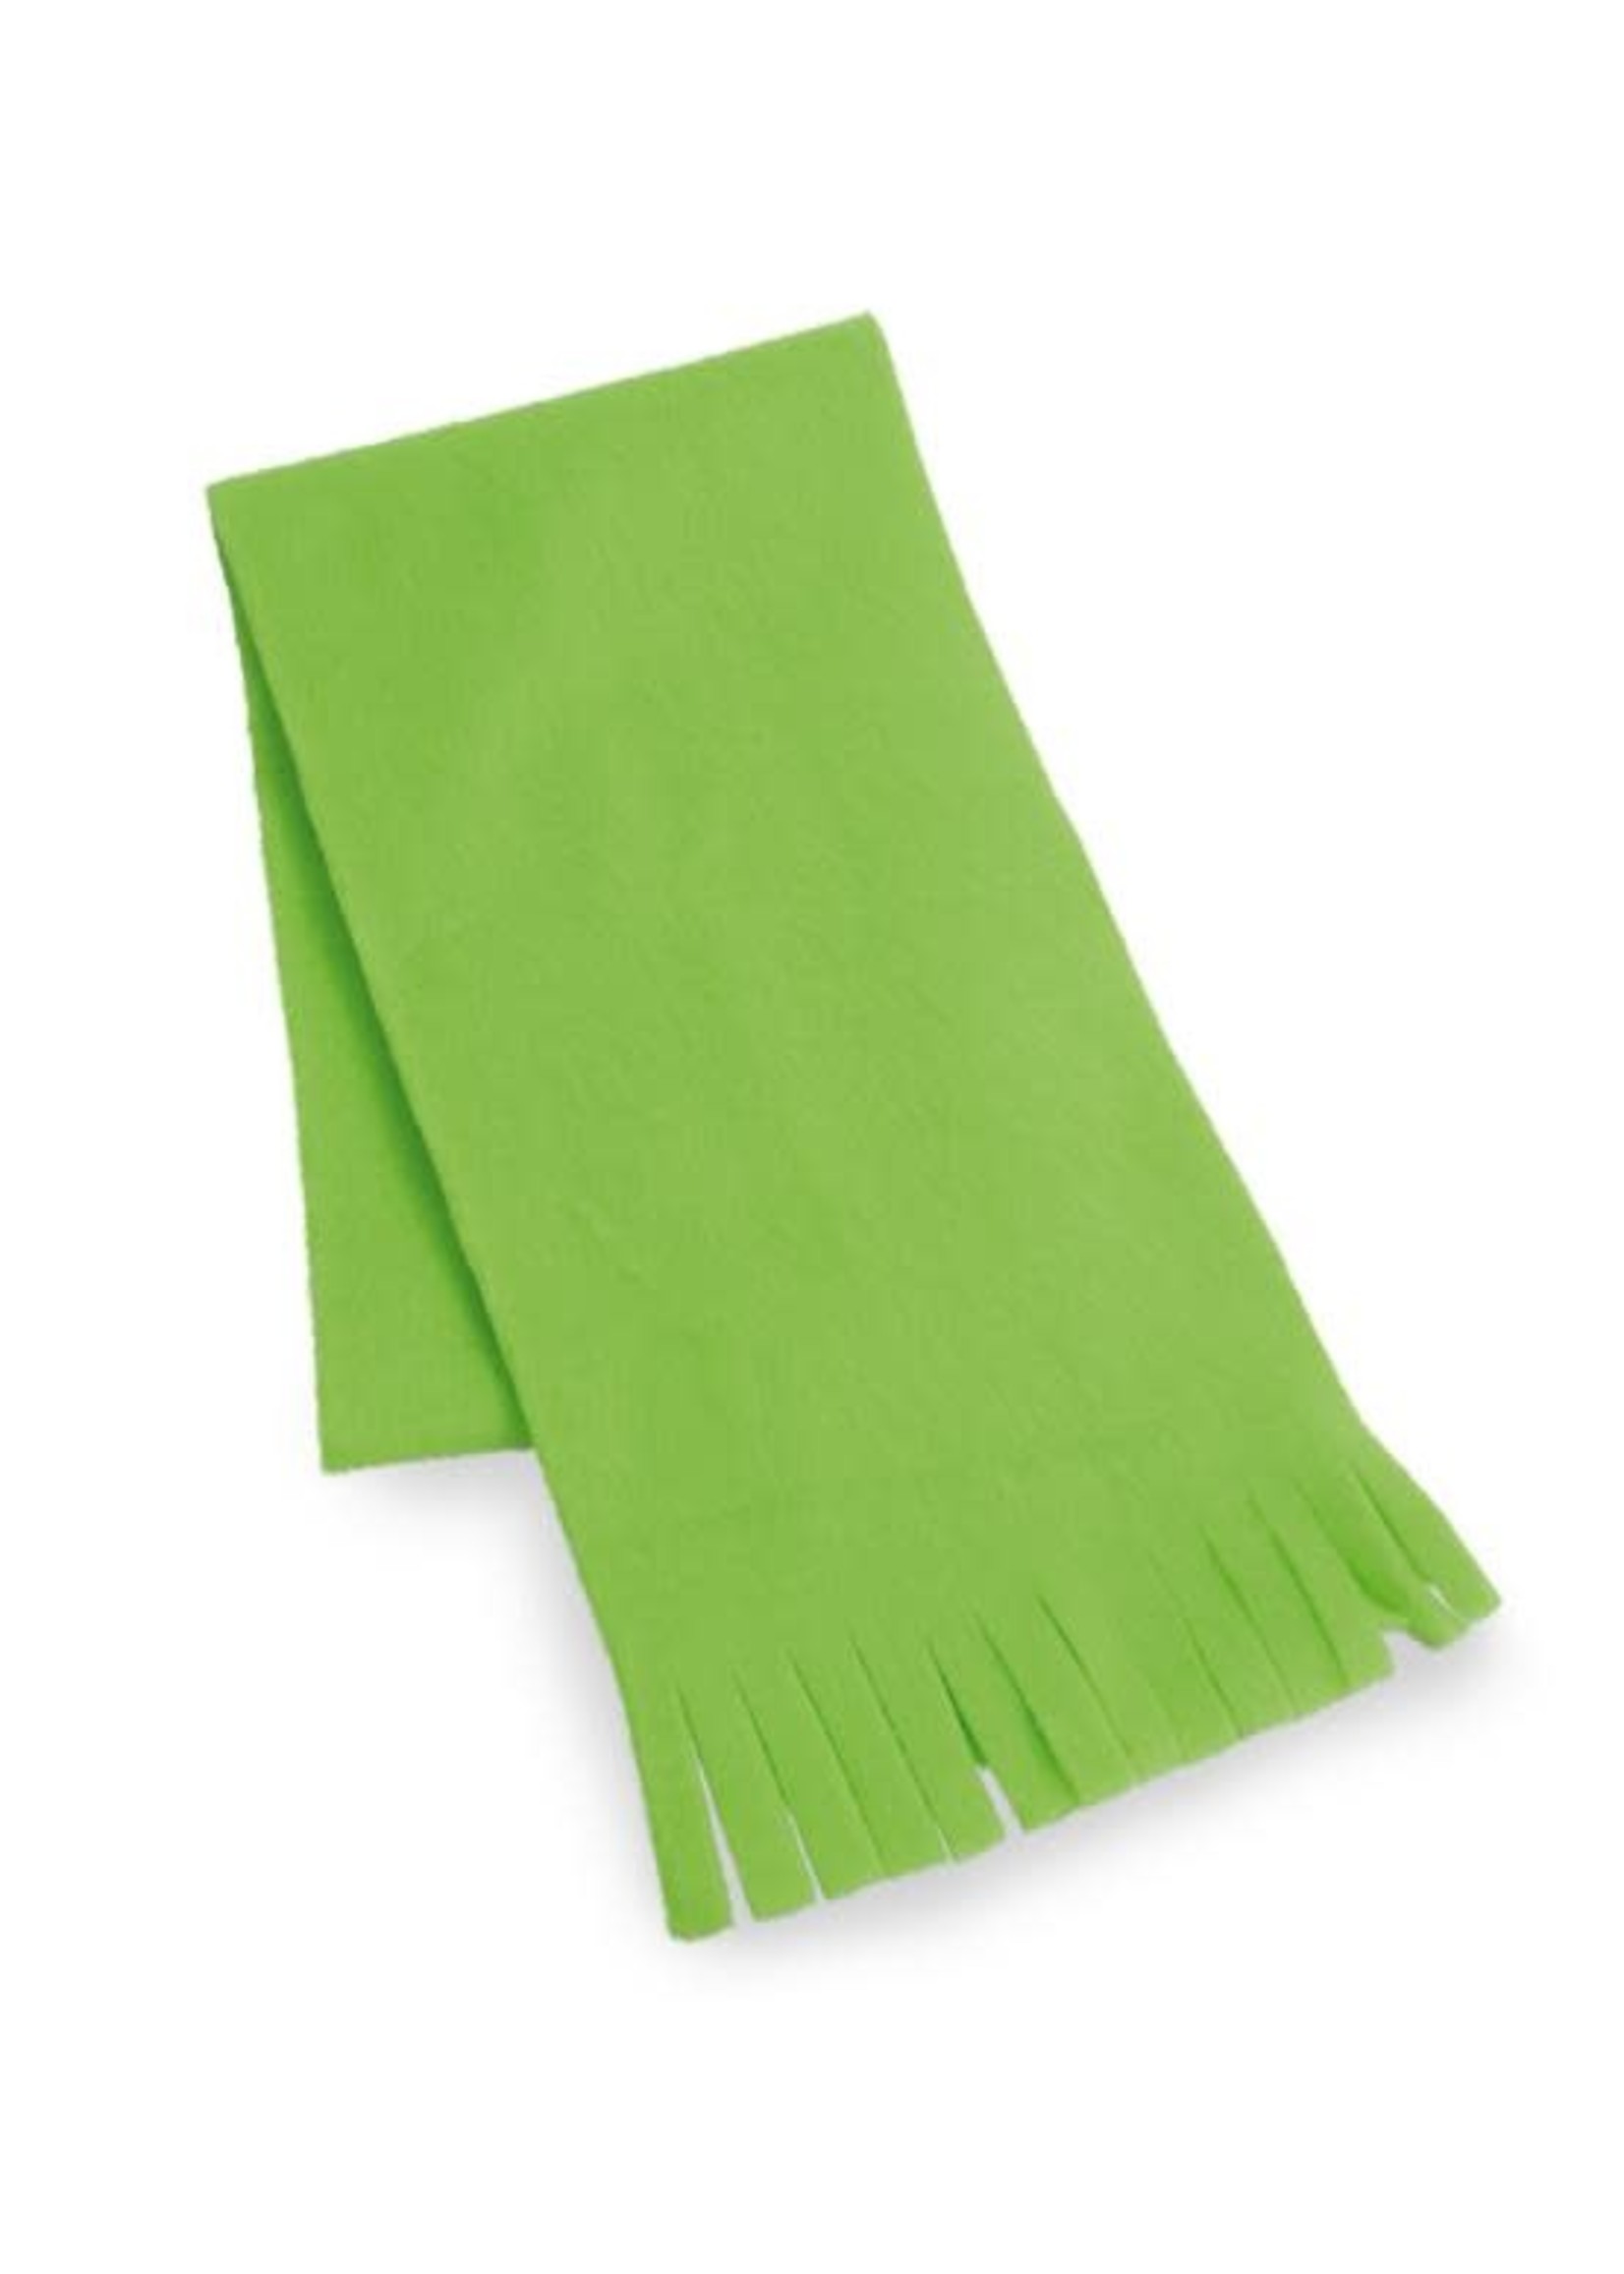 Feestkleding Breda Sjaal groen neon